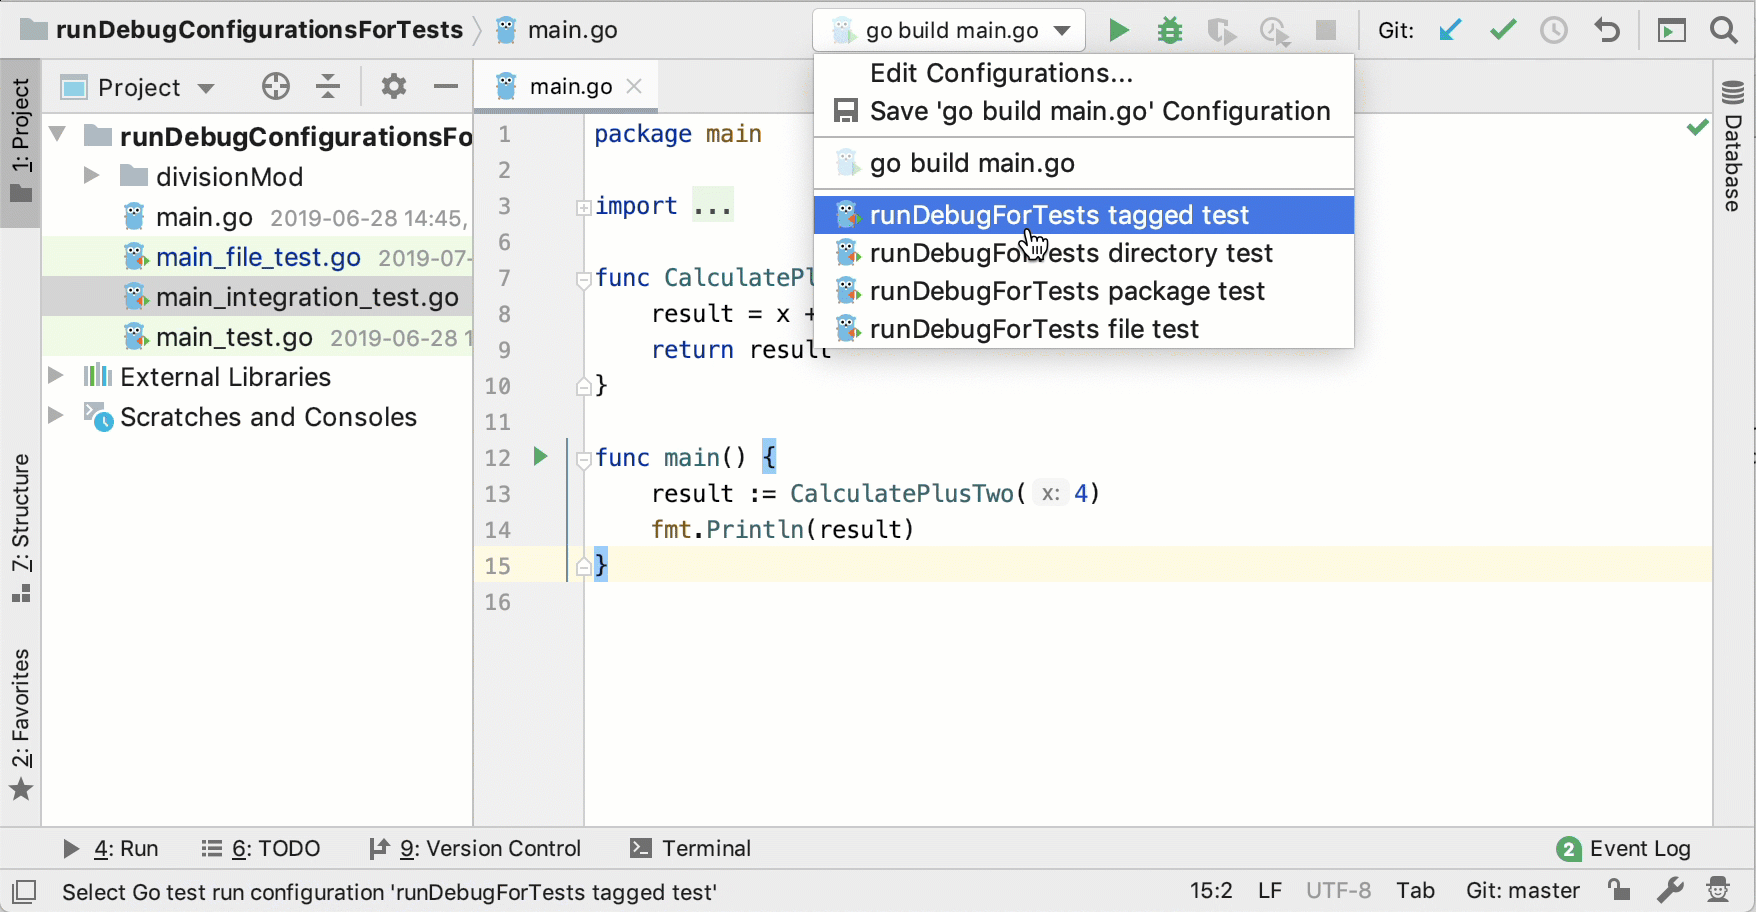 Run a run/debug configuration for tests